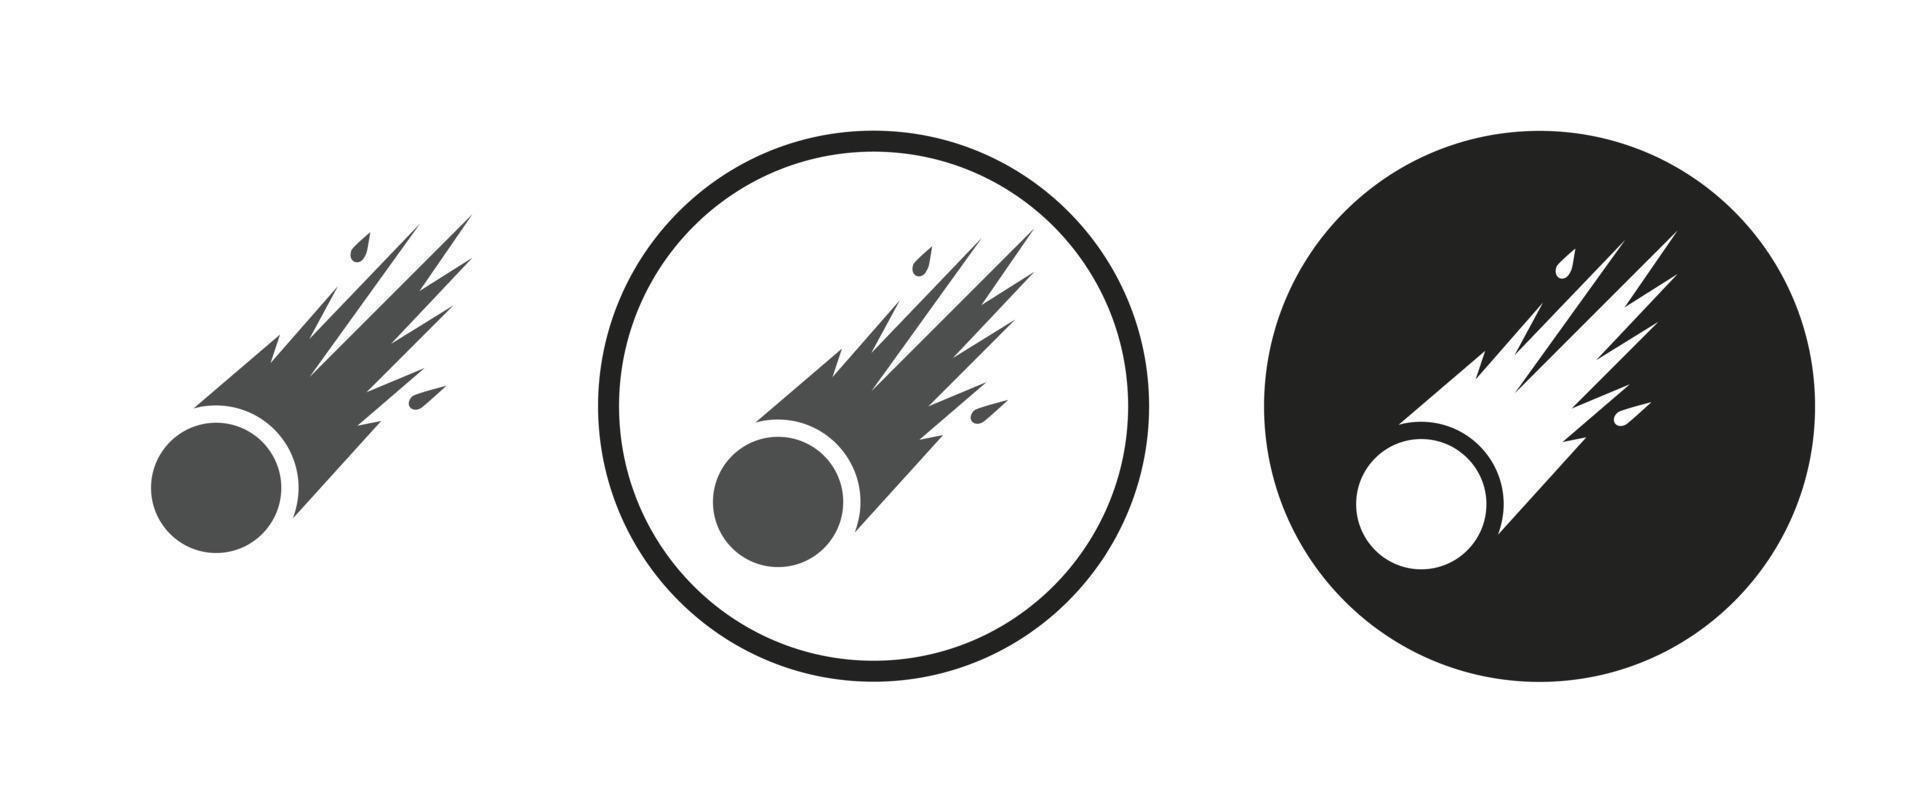 Fire ball icon . web icon set .vector illustration vector